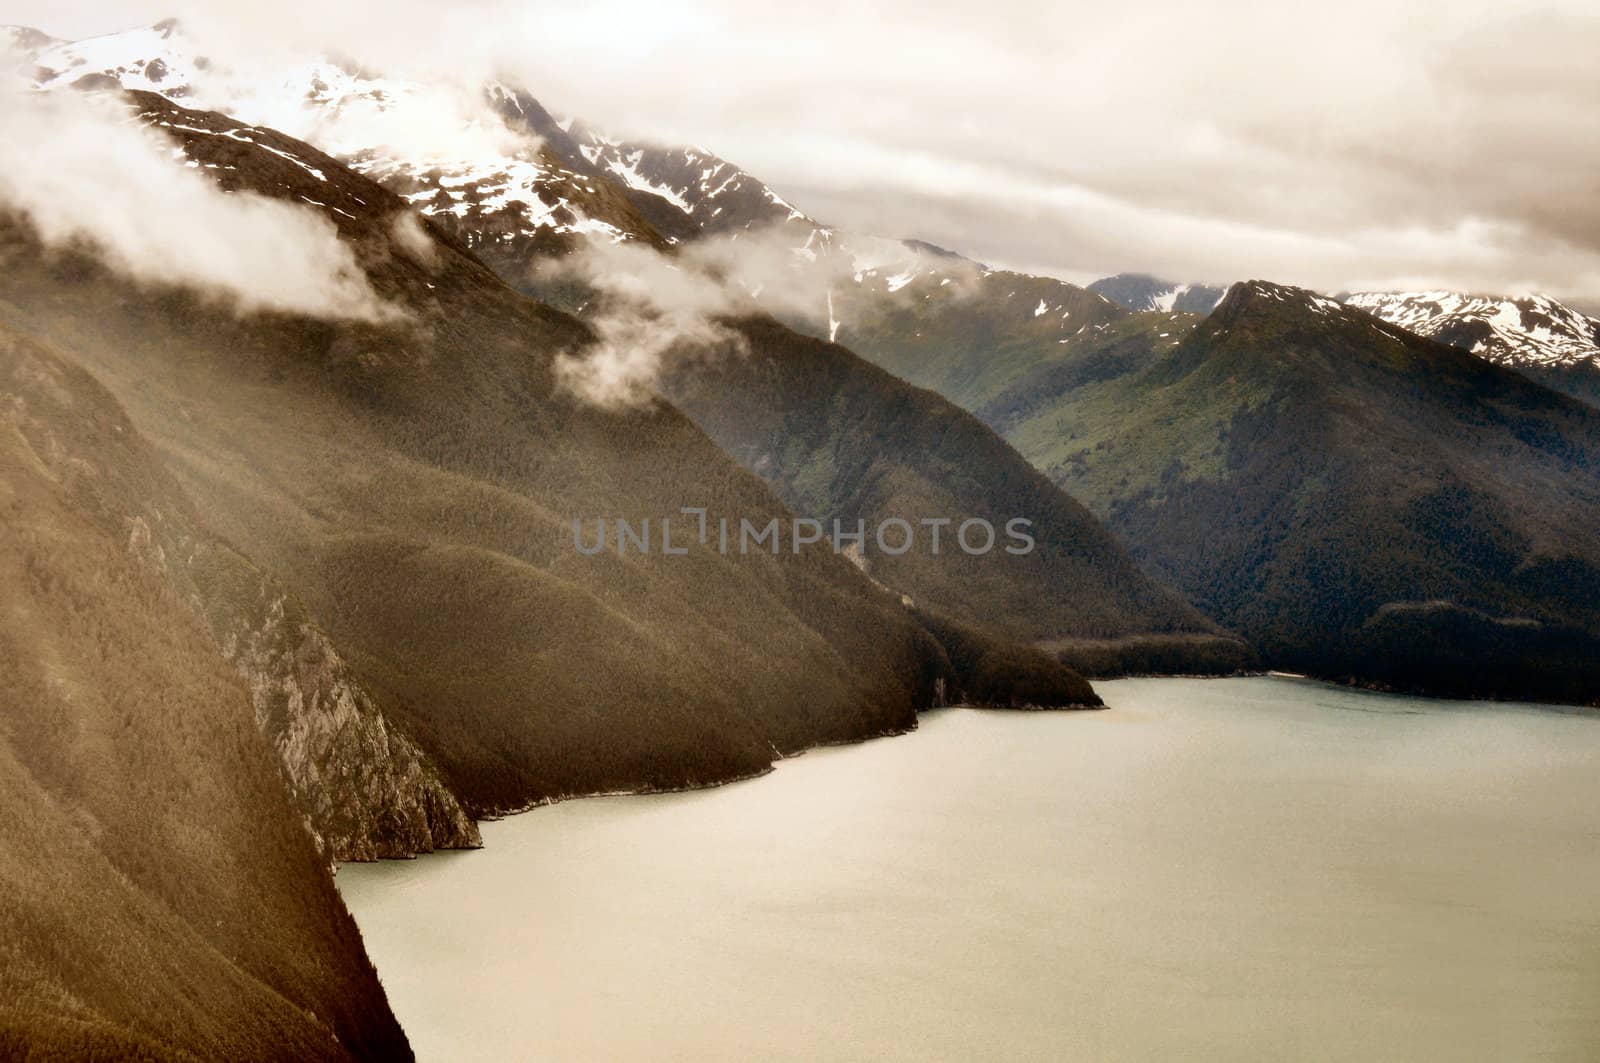 Alaskan Mountains by RefocusPhoto